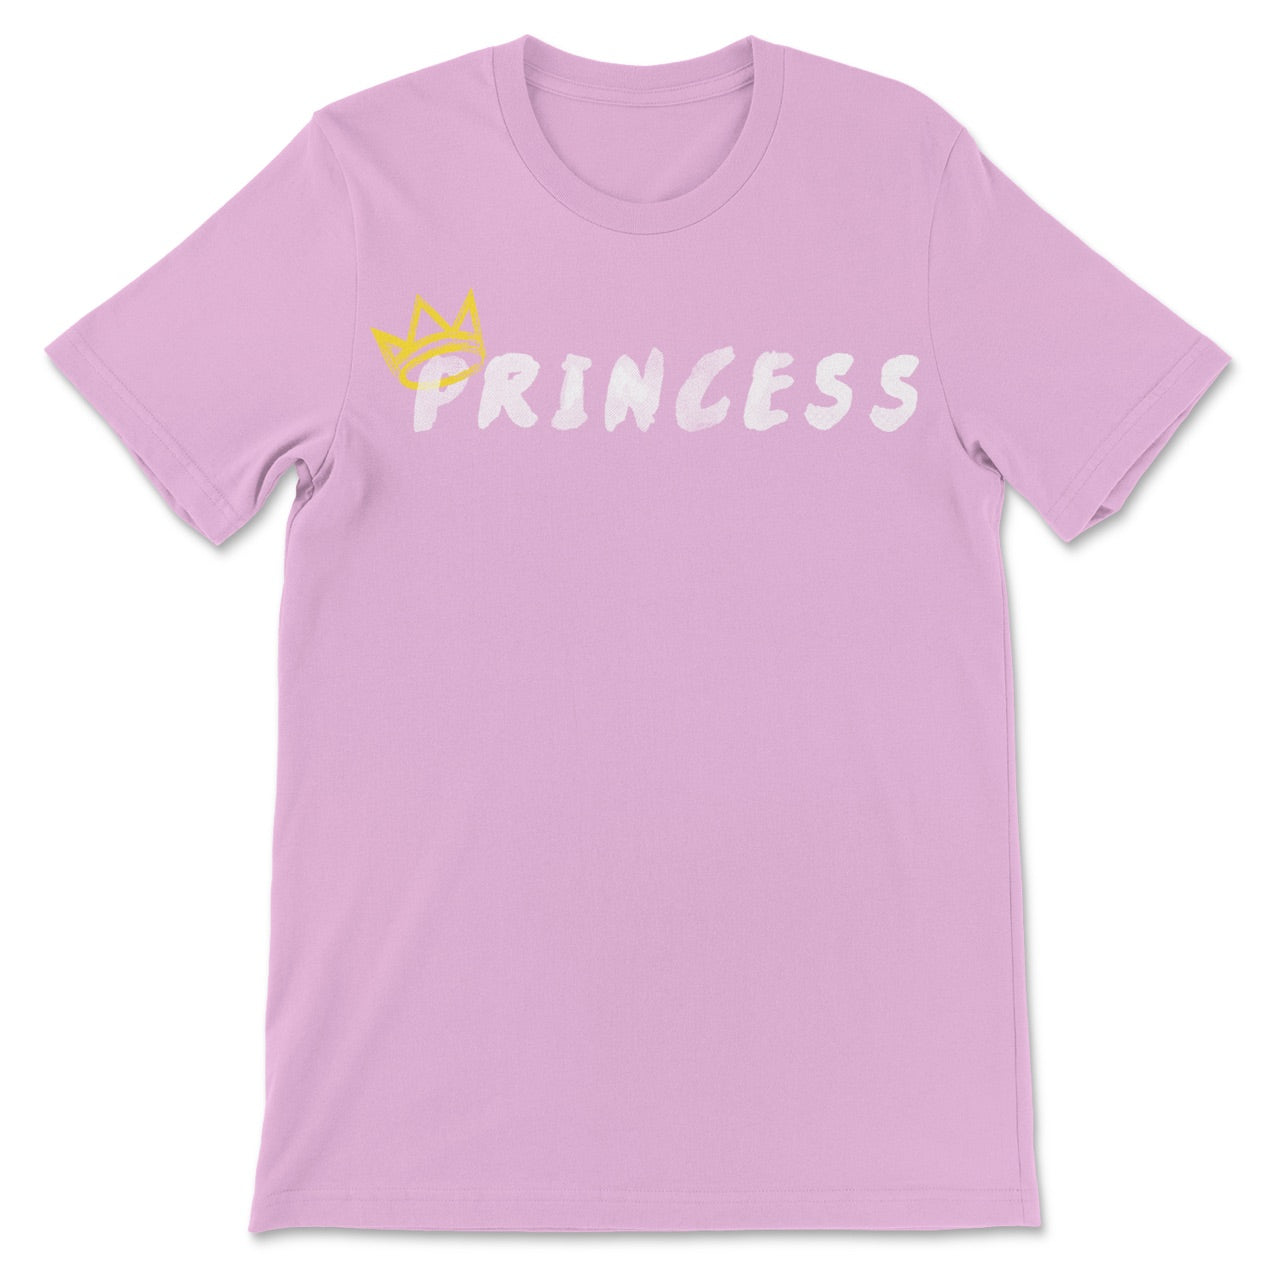 Princess Short Sleeve T-Shirt (Gold Crown)